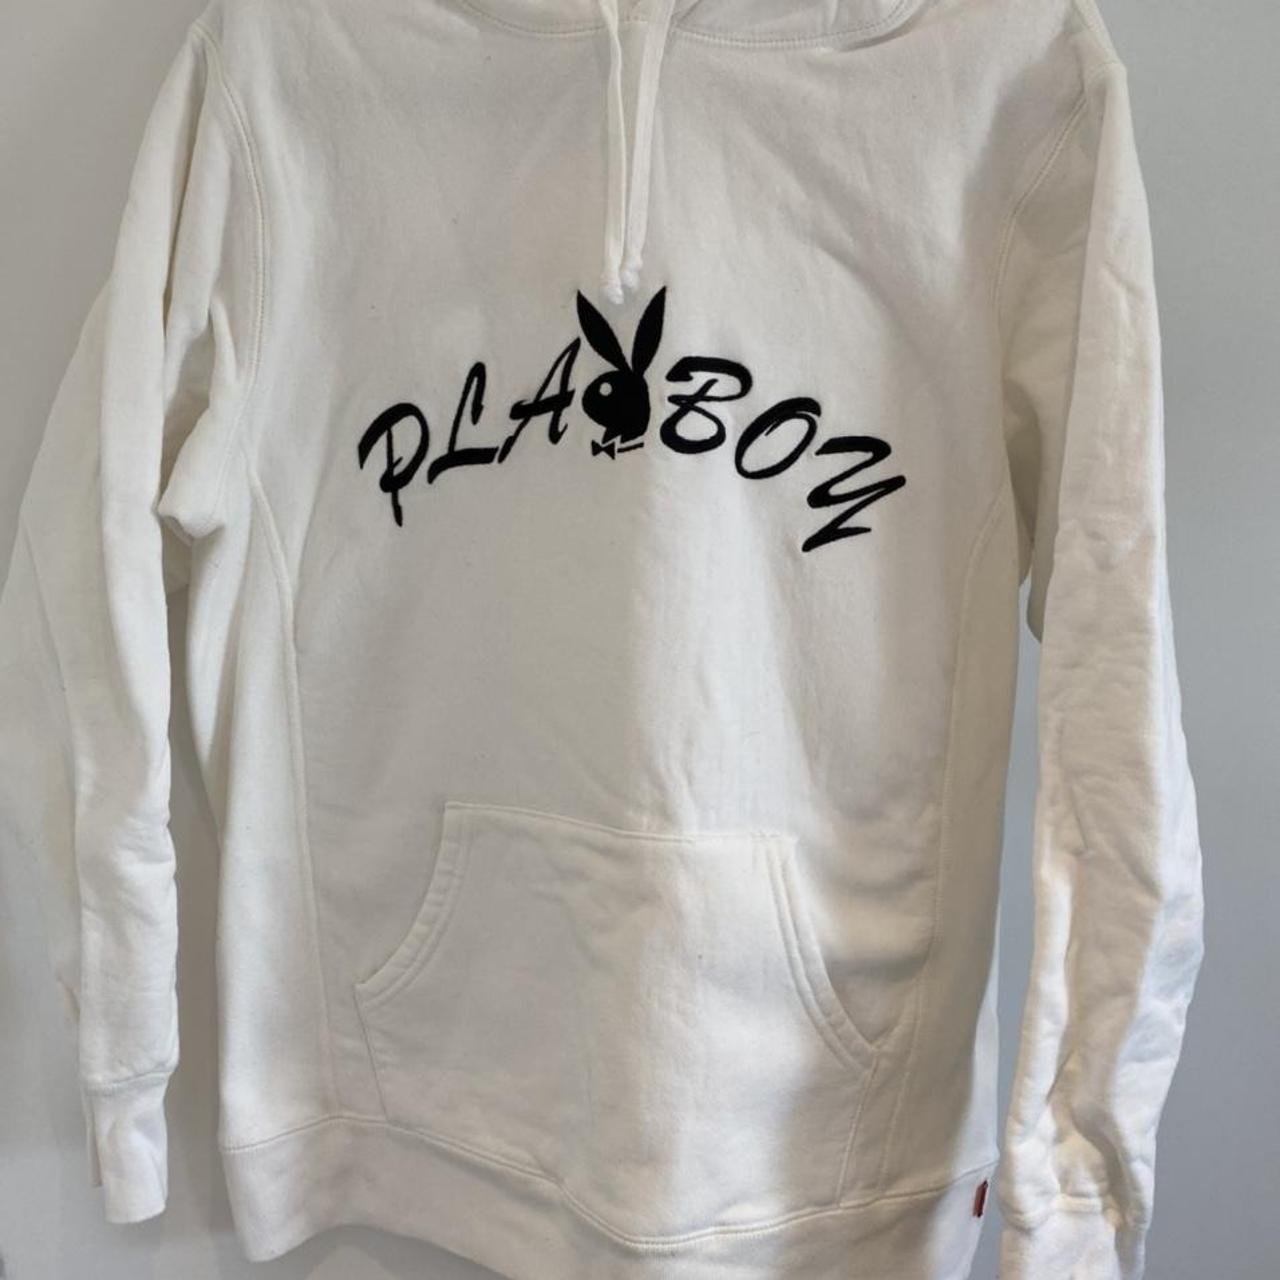 Authentic Playboy x supreme playboy hoodie Great - Depop